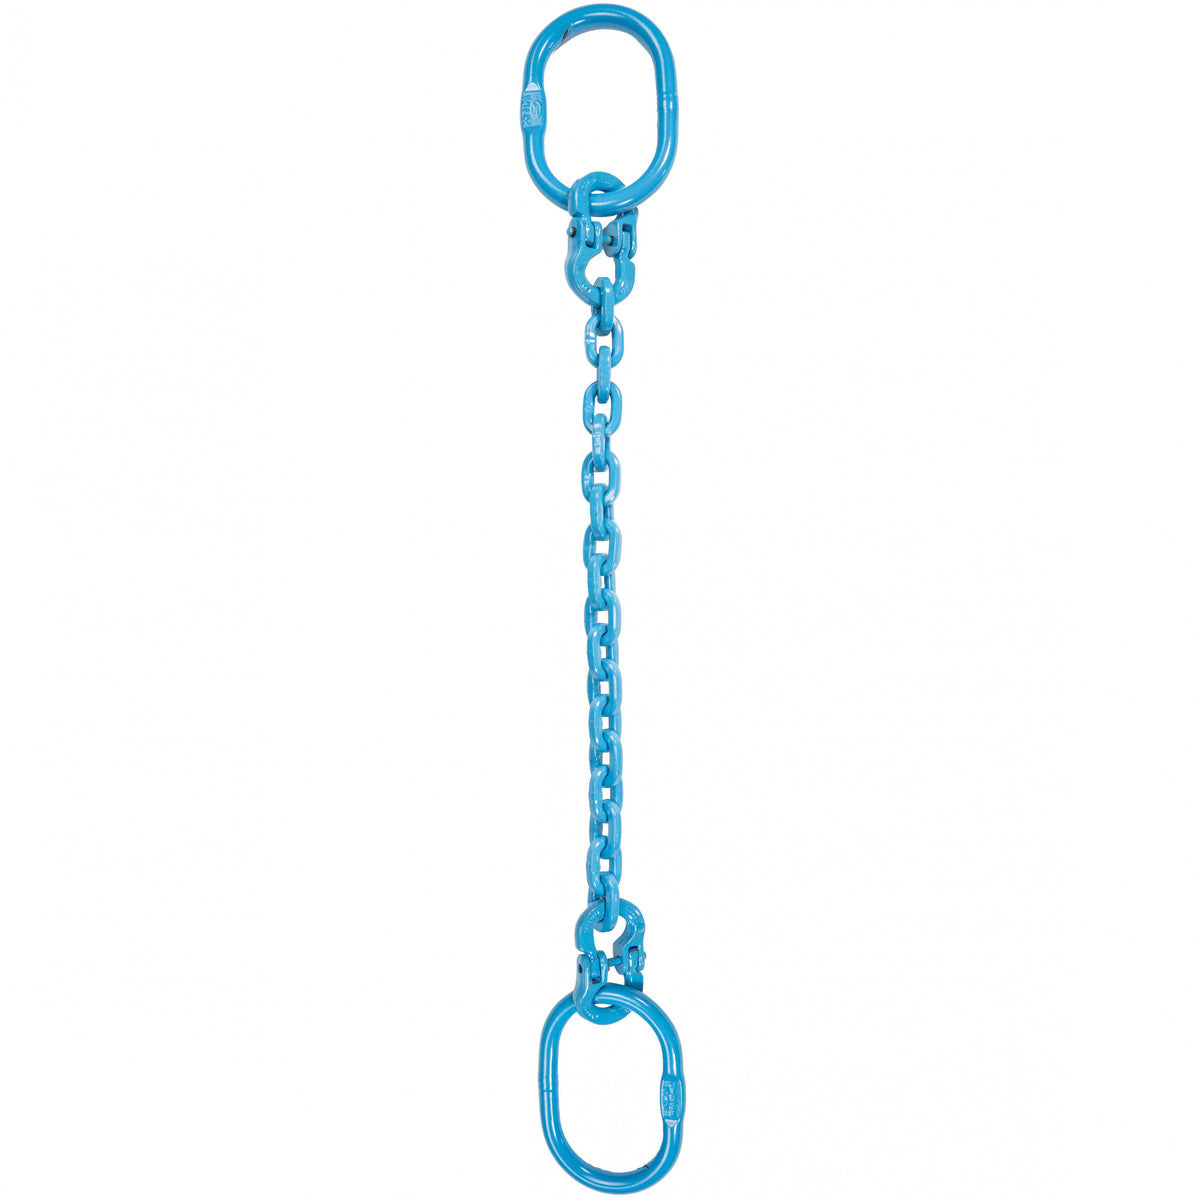 9/32" x 4' - Pewag Single Leg Chain Sling w/ Oblong Master Links - Grade 120